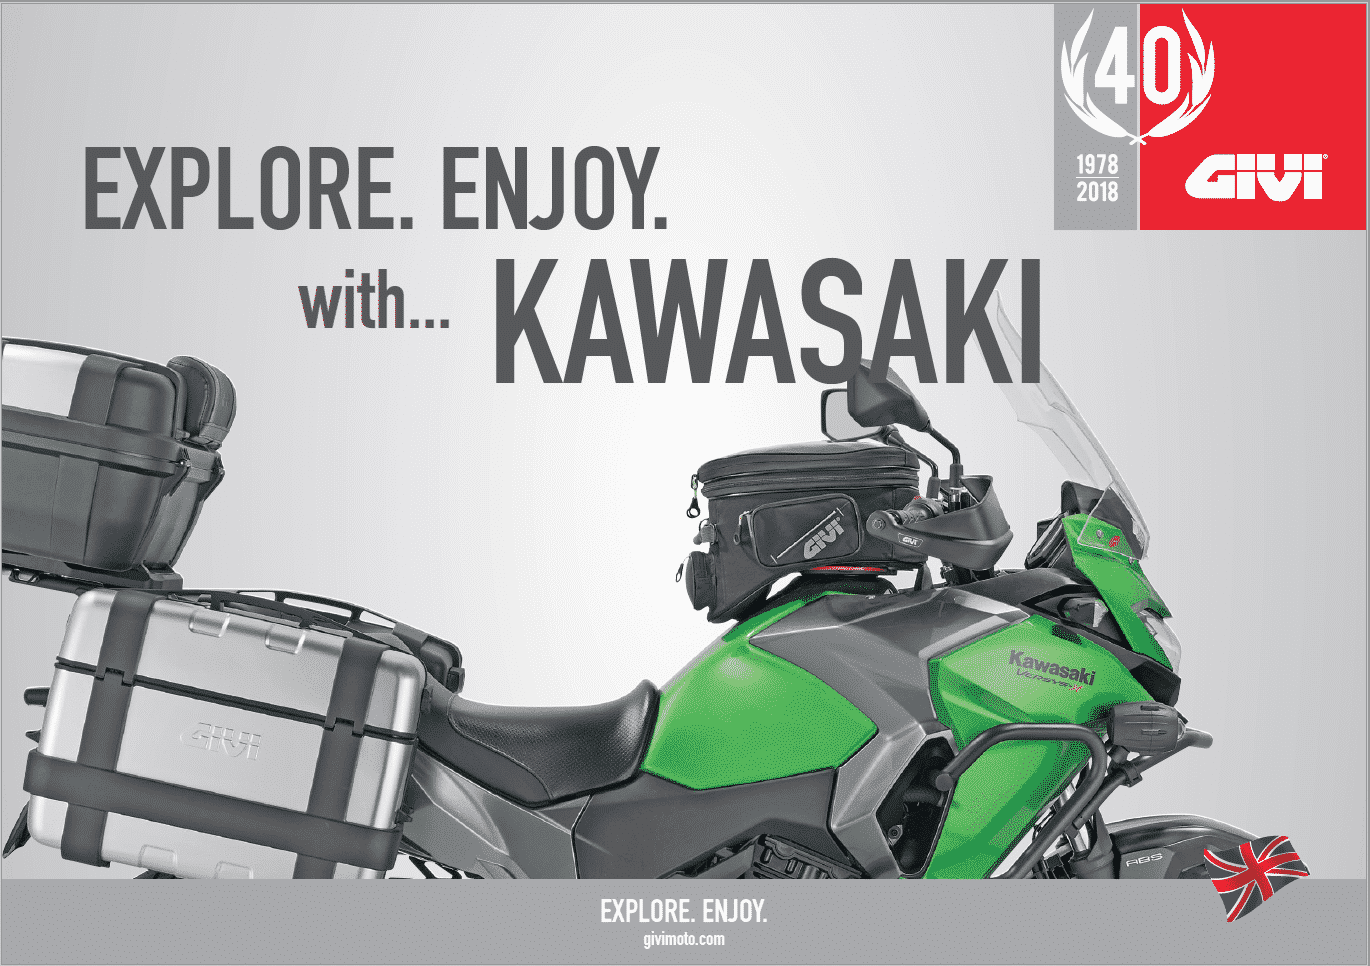 GIVI Accessories for Kawasaki Motorcycles - ของแต่ง GIVI สำหรับ Kawasaki